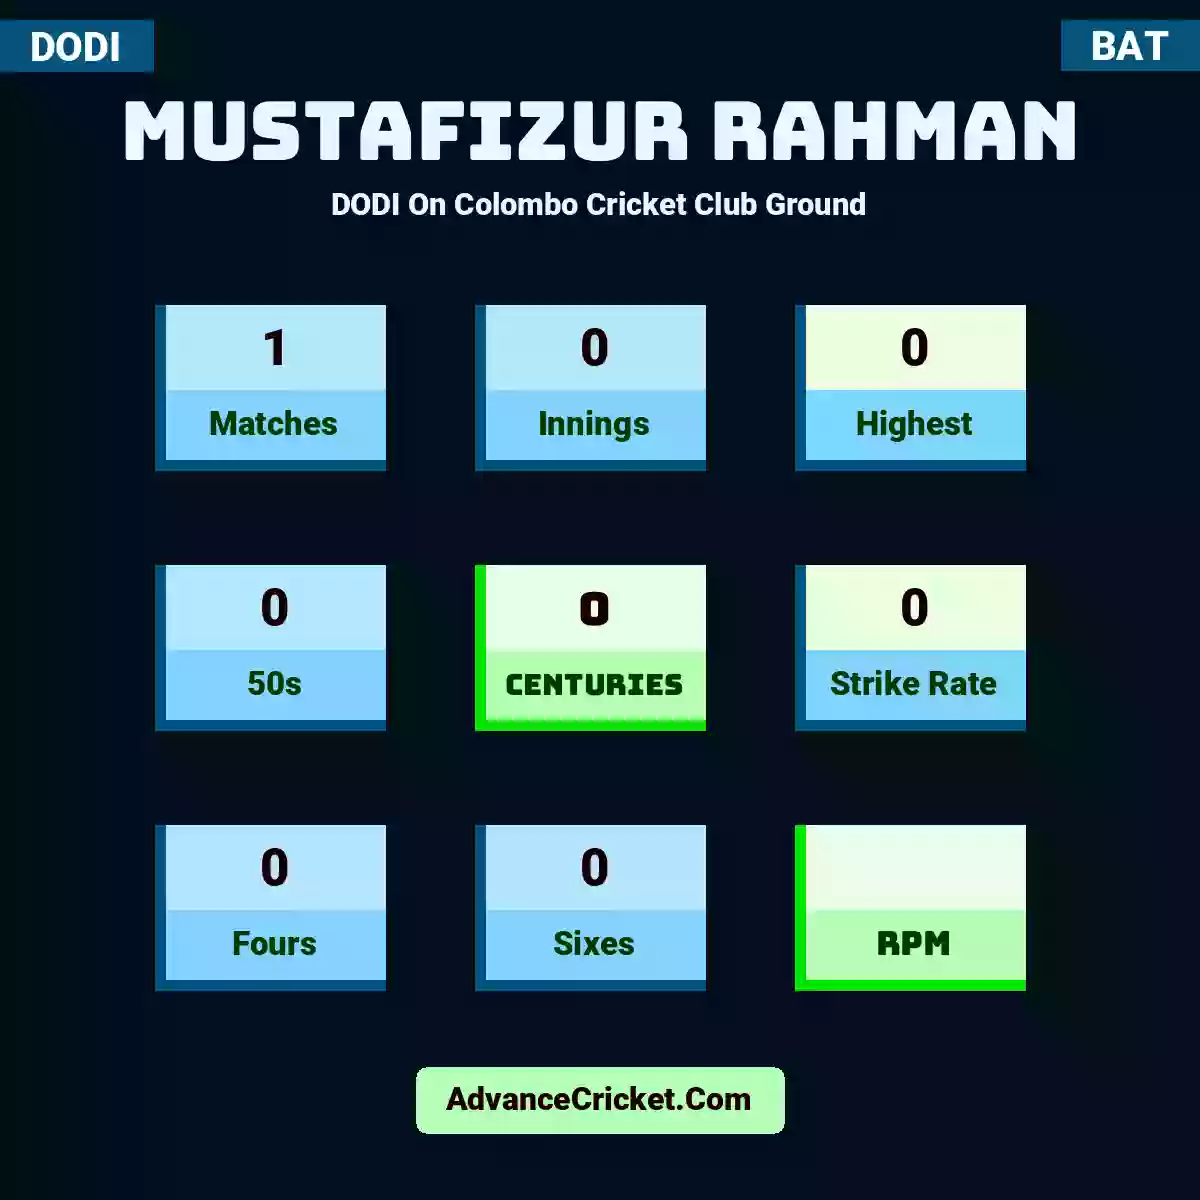 Mustafizur Rahman DODI  On Colombo Cricket Club Ground, Mustafizur Rahman played 1 matches, scored 0 runs as highest, 0 half-centuries, and 0 centuries, with a strike rate of 0. M.Rahman hit 0 fours and 0 sixes.